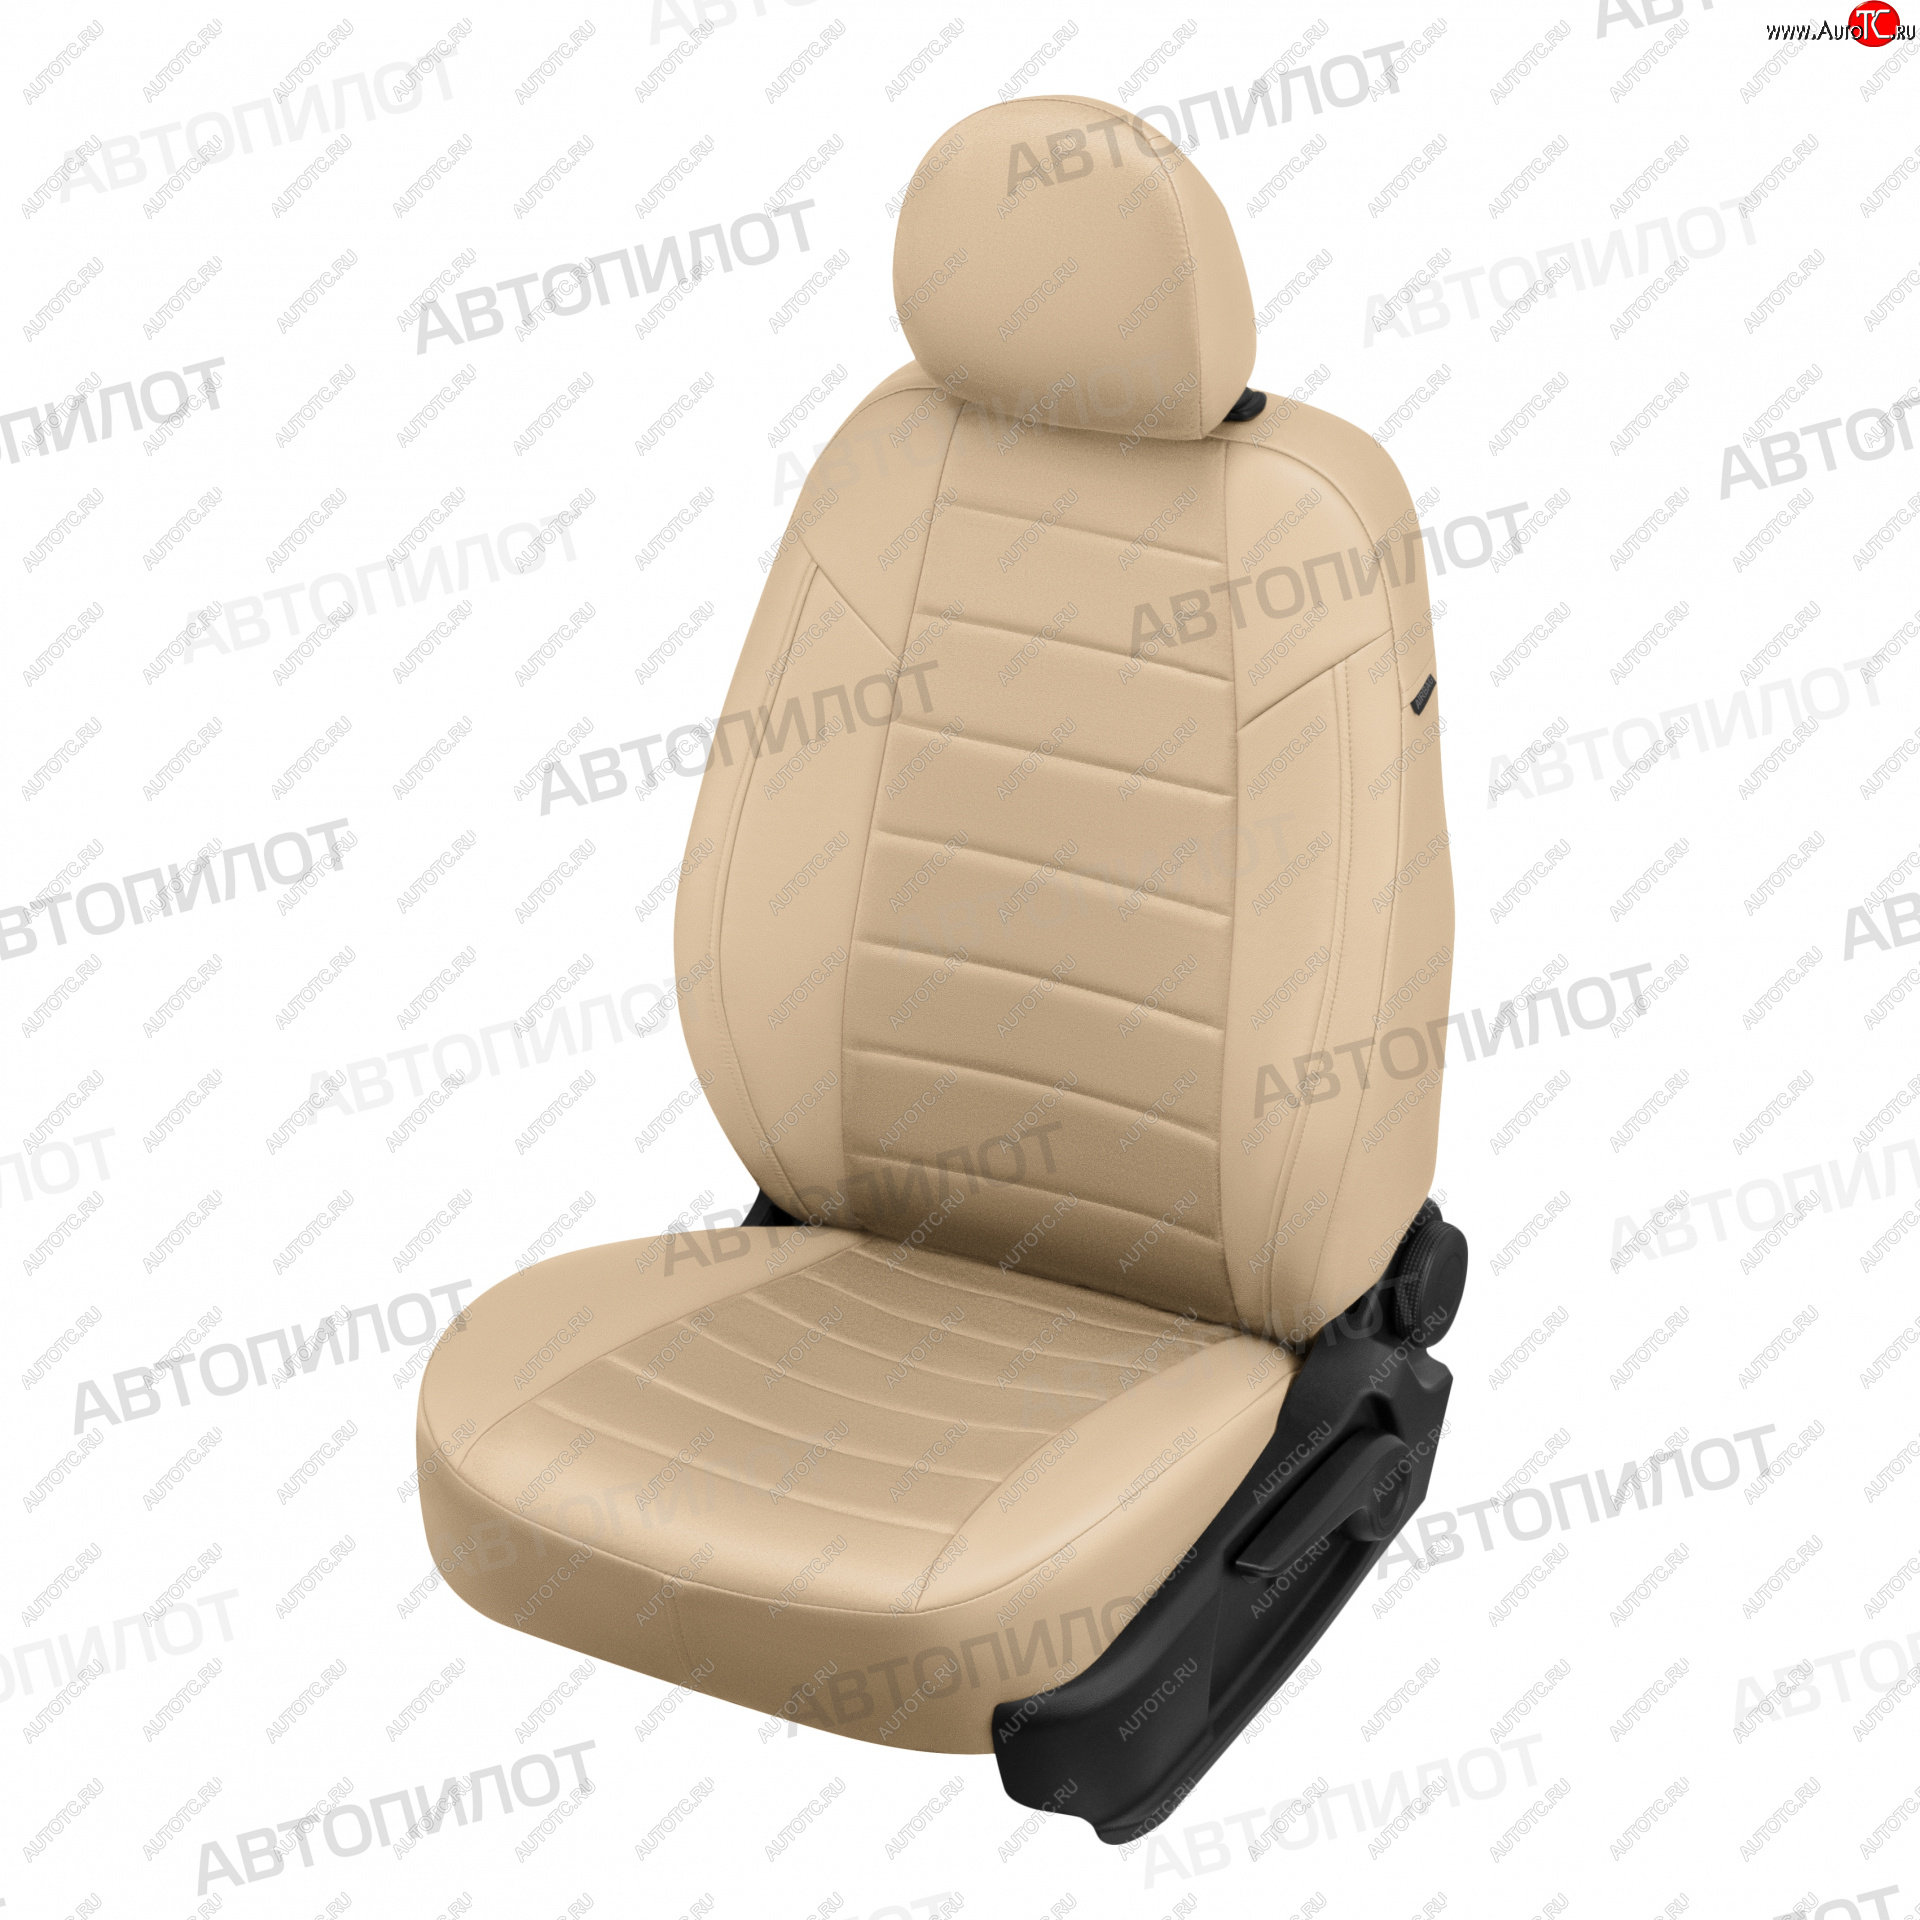 13 449 р. Чехлы сидений (экокожа/алькантара) Автопилот  Hyundai Terracan  1 HP (2001-2007) (бежевый)